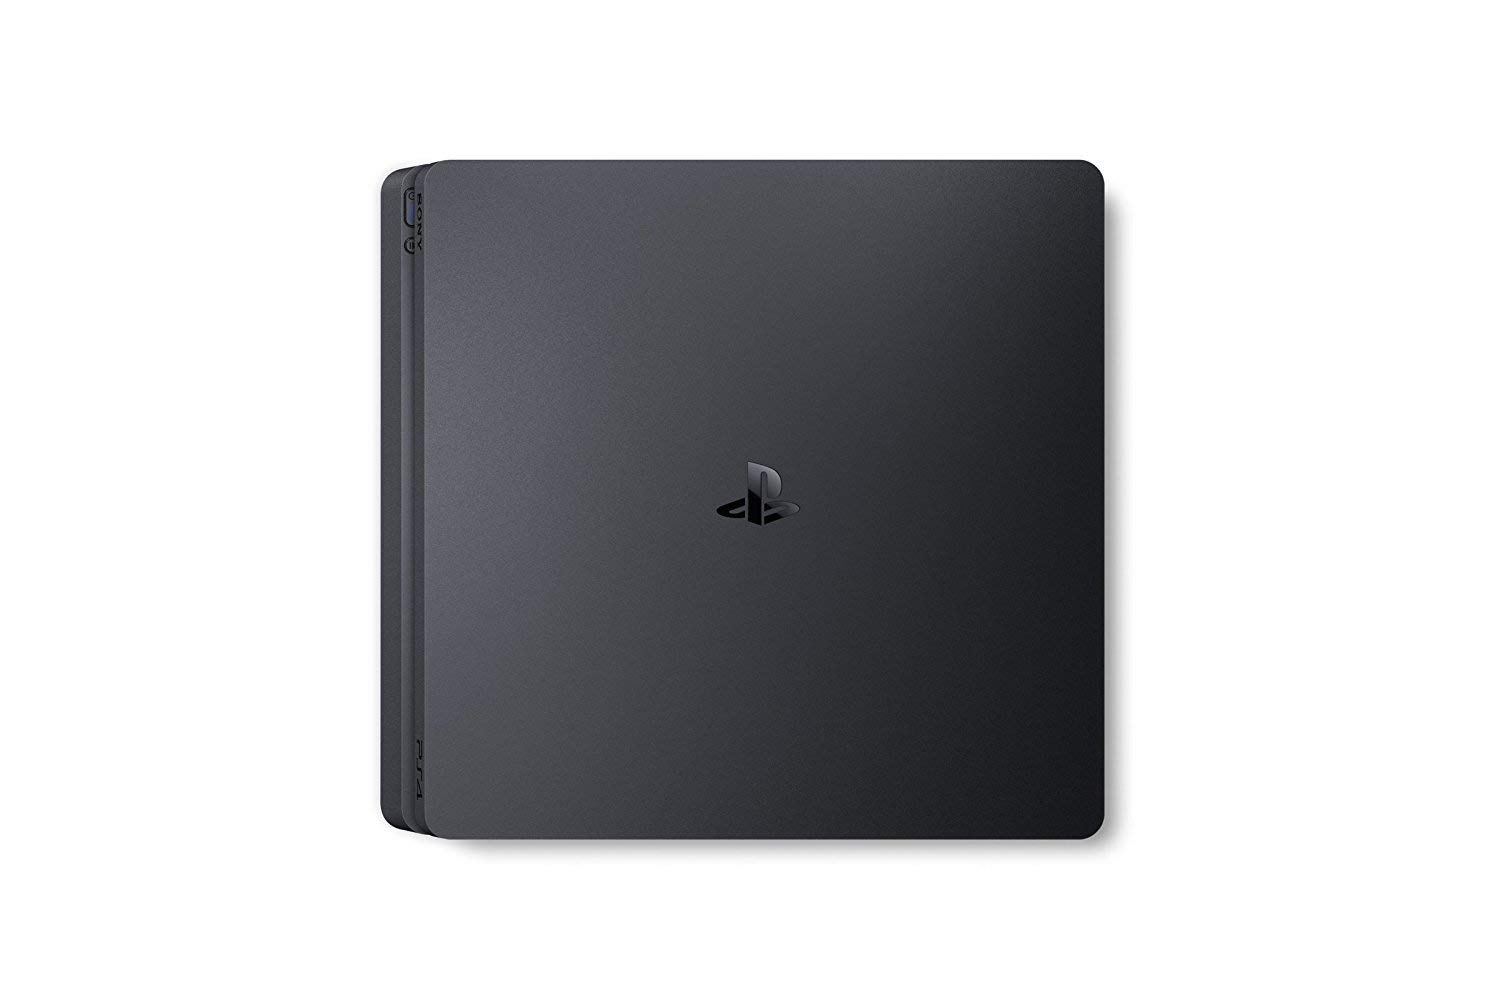 PlayStation 4 CUH-2200 Series 1TB HDD (Jet Black)